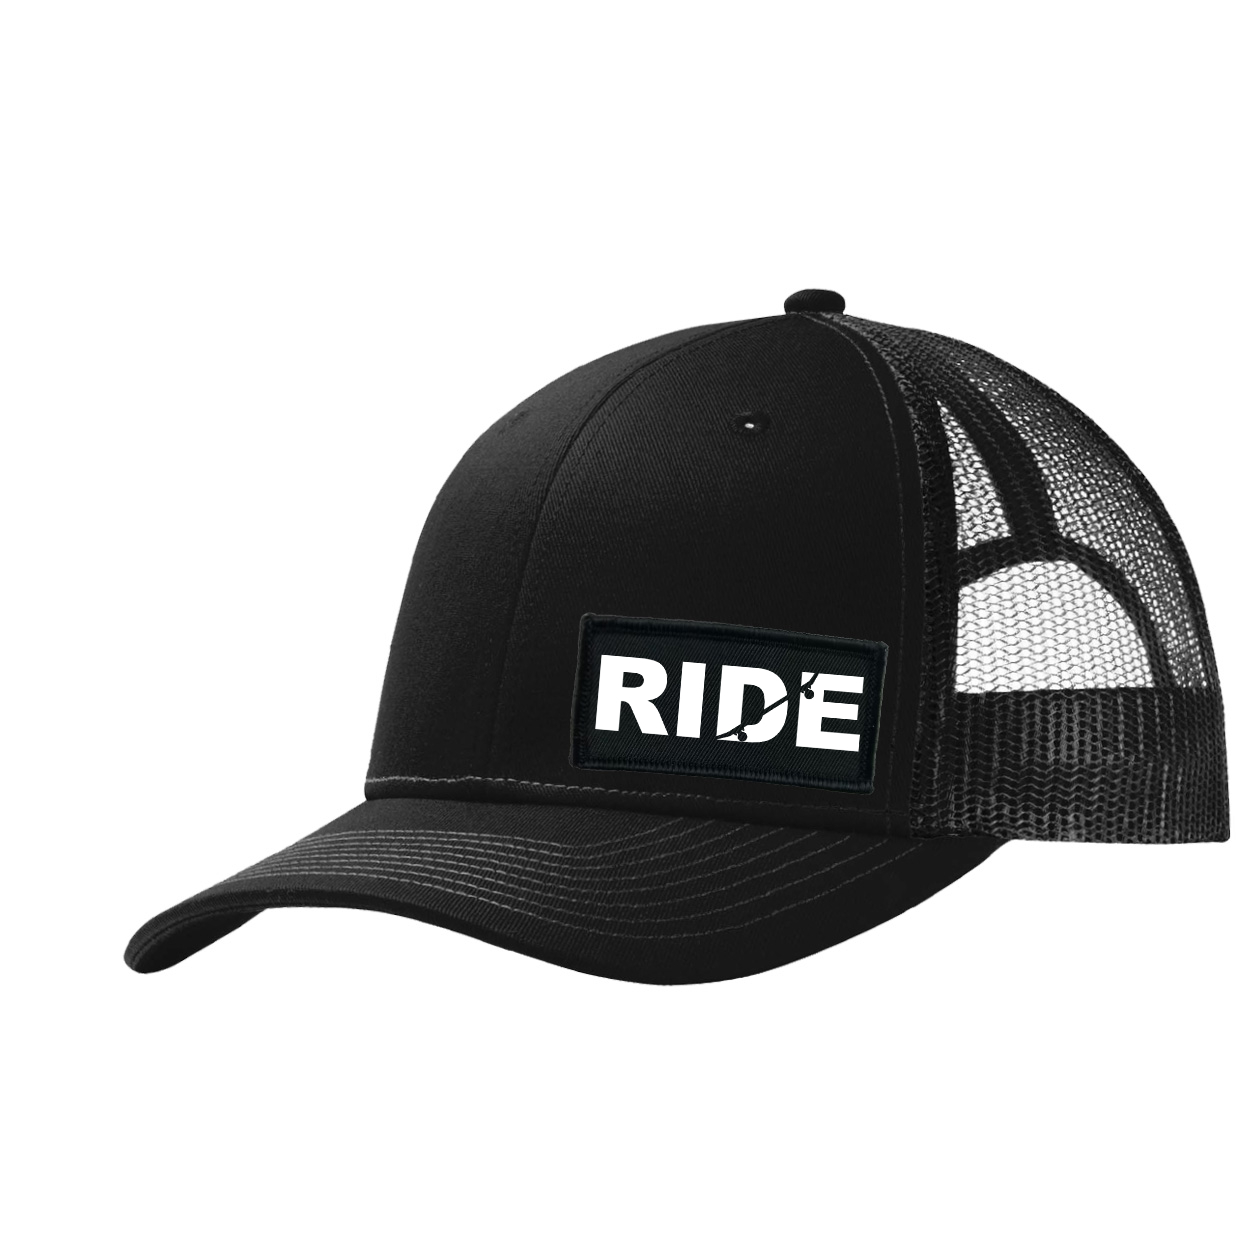 Ride Skateboard Logo Night Out Woven Patch Snapback Trucker Hat Black (White Logo)